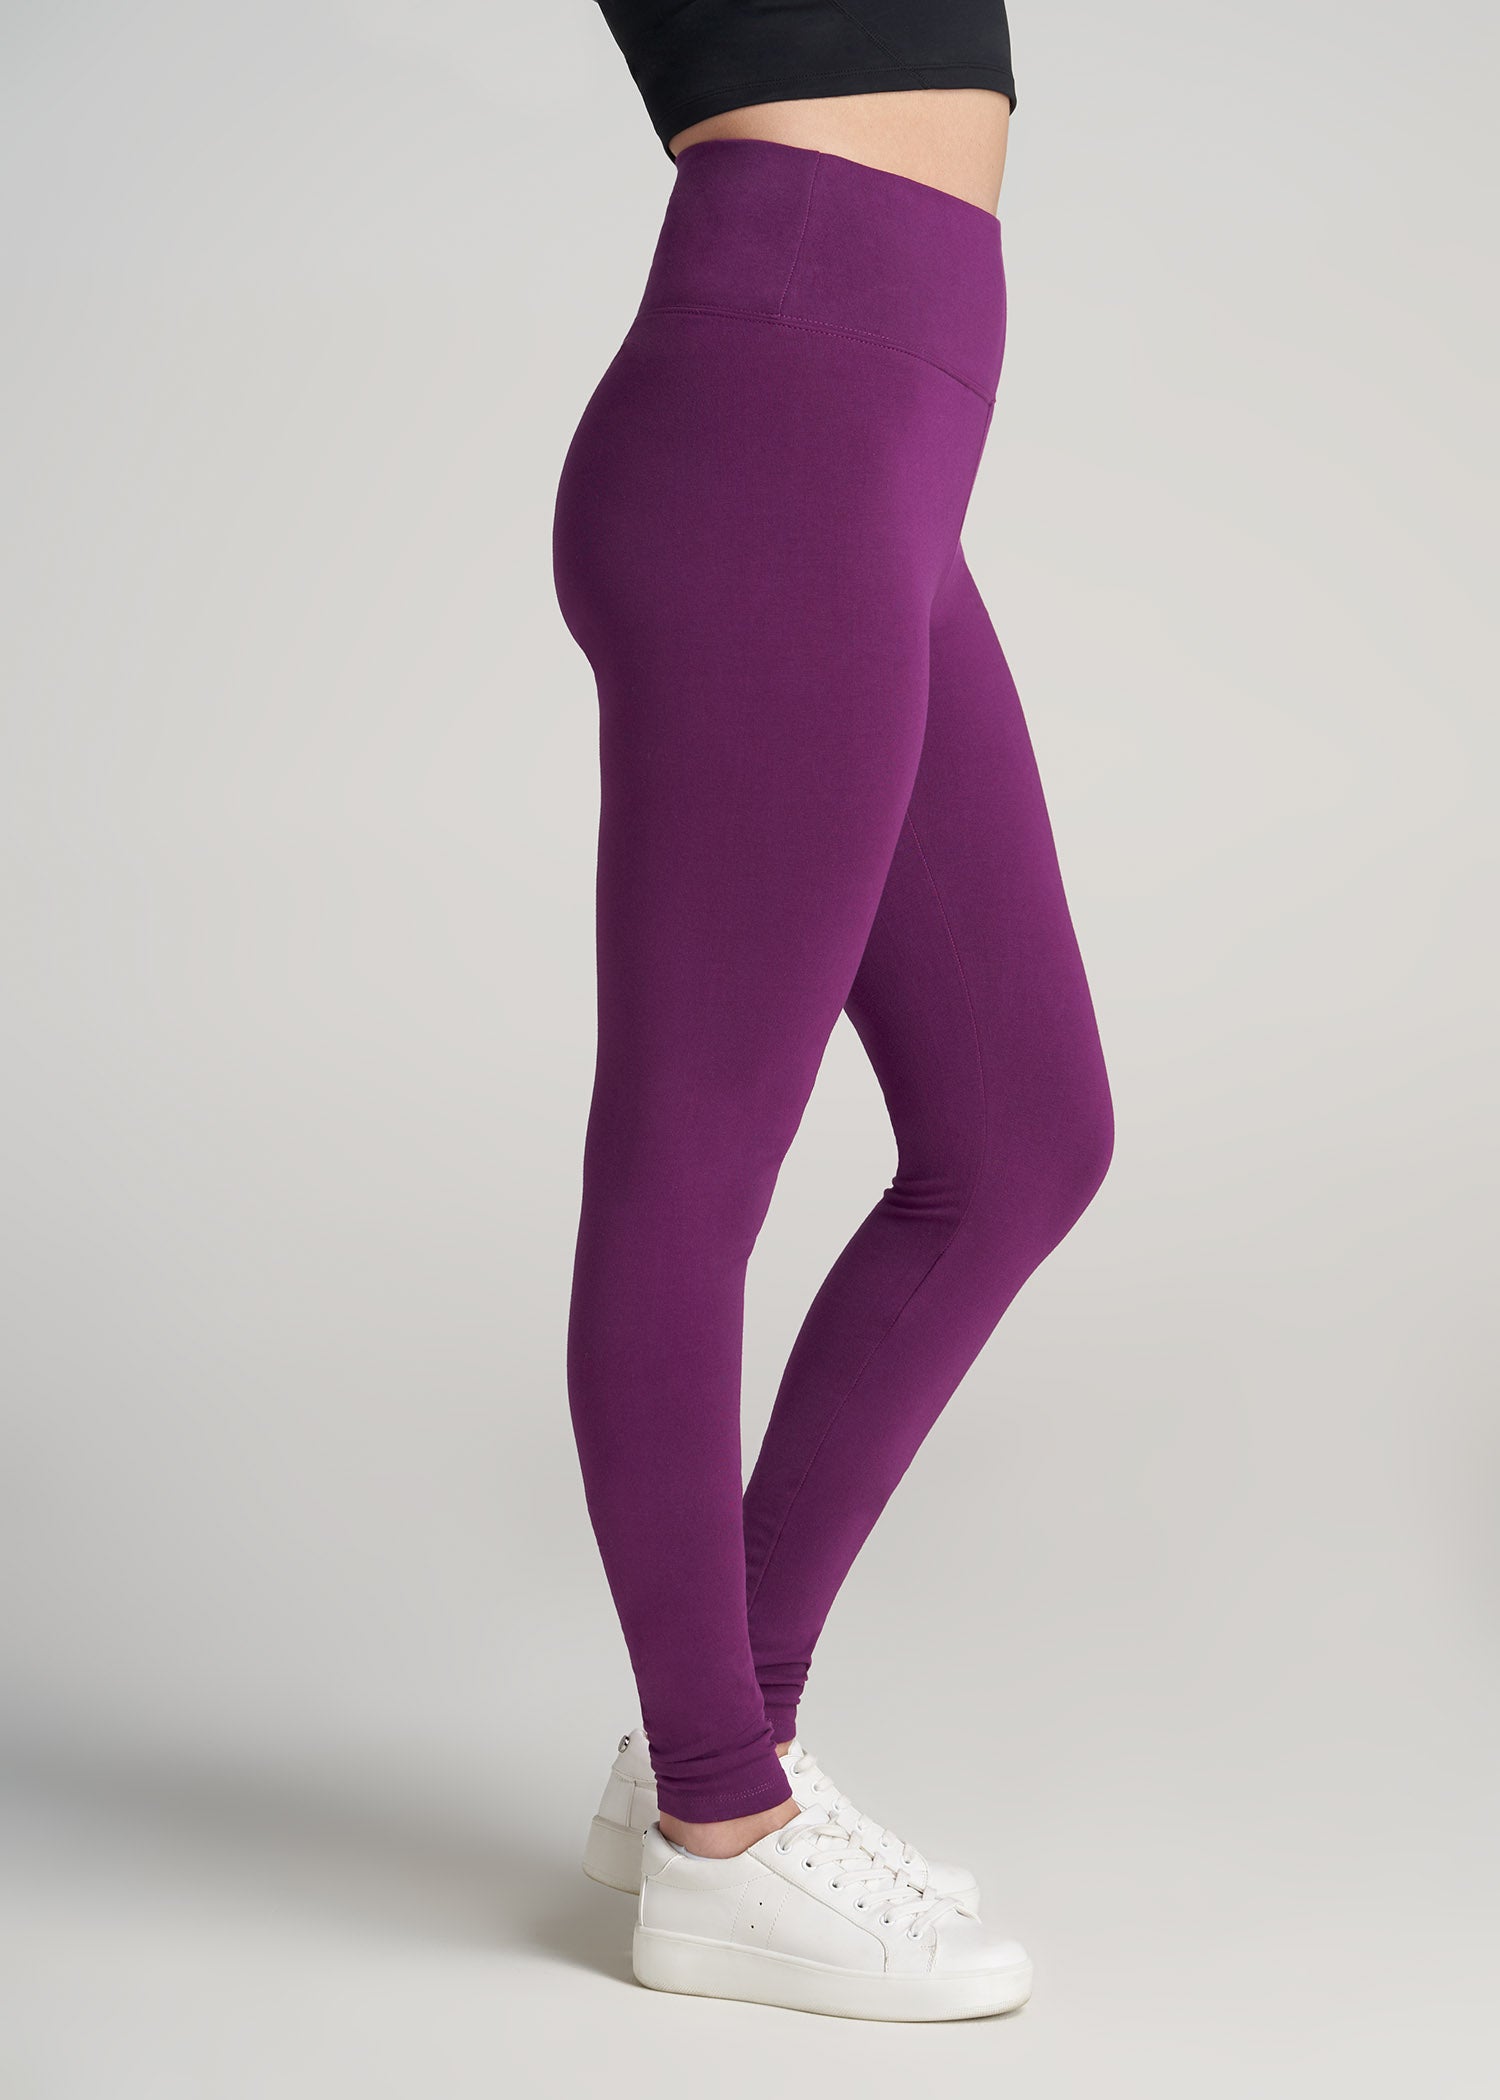 Long Tall Sally - LTS Tall Dark Cord Leggings - Women's Purple :  : Fashion